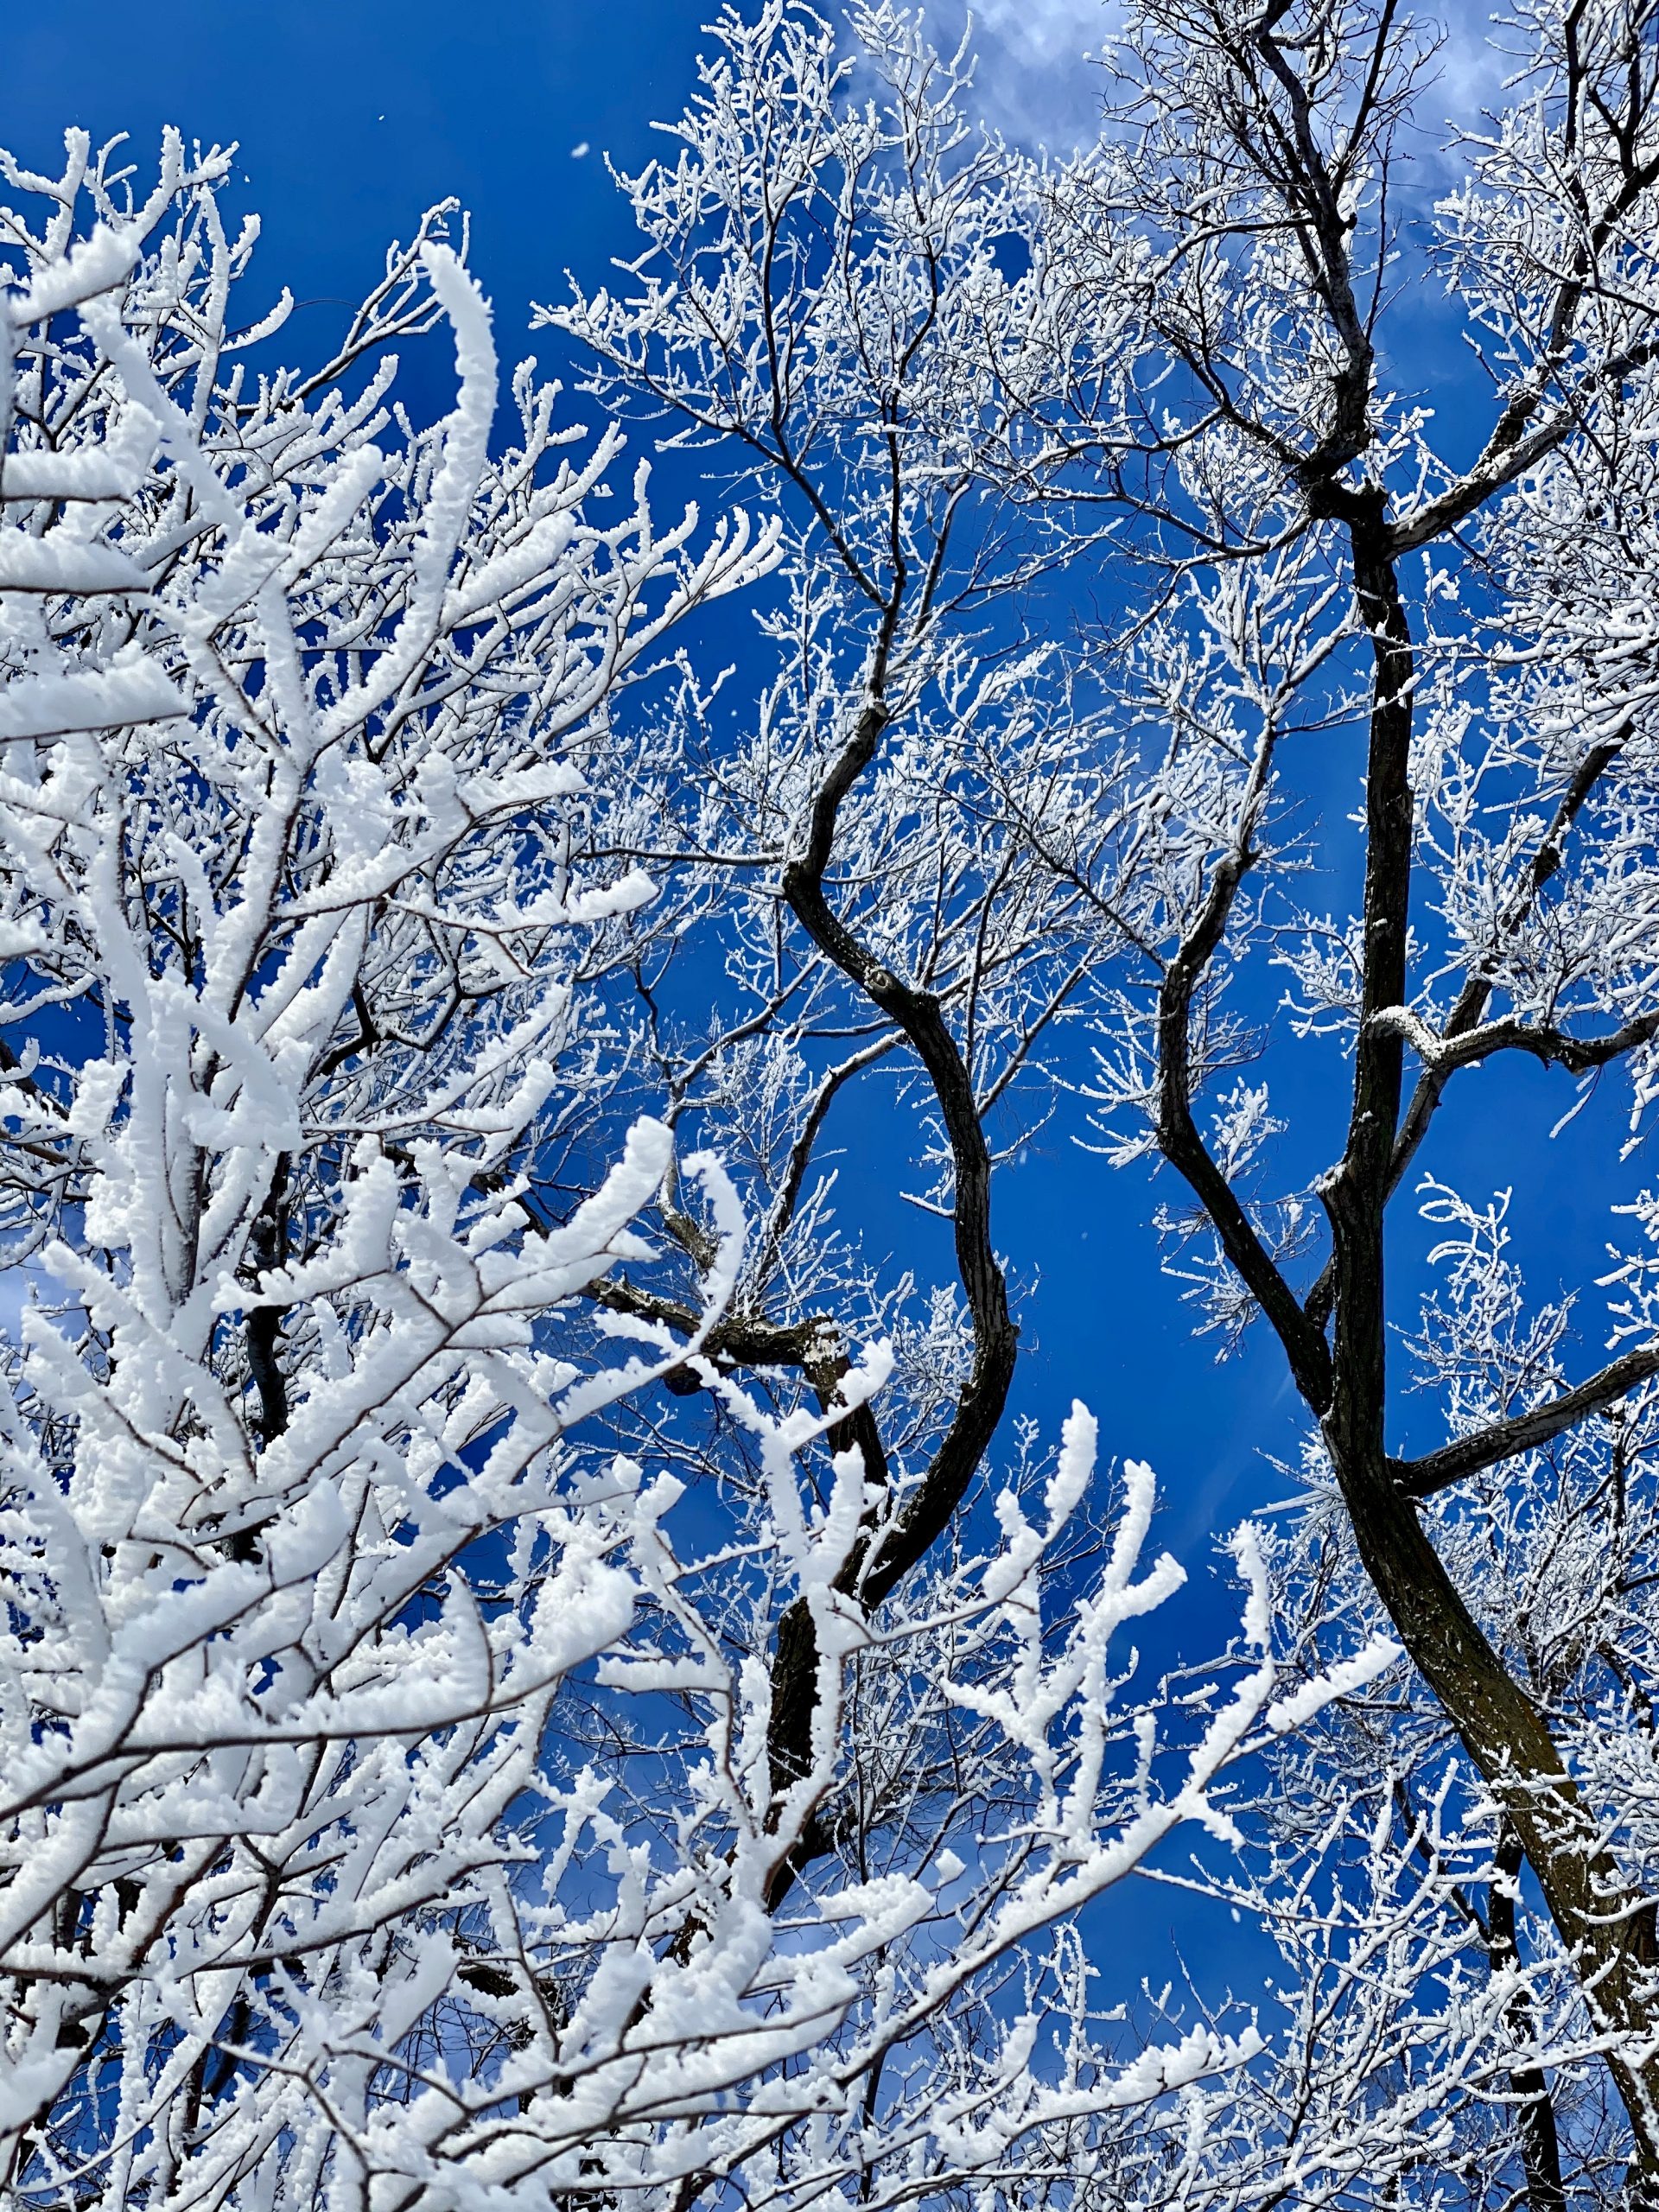 Hoar Frost Winter Wonderland (Blank Photo Card) – Sprig of Heather